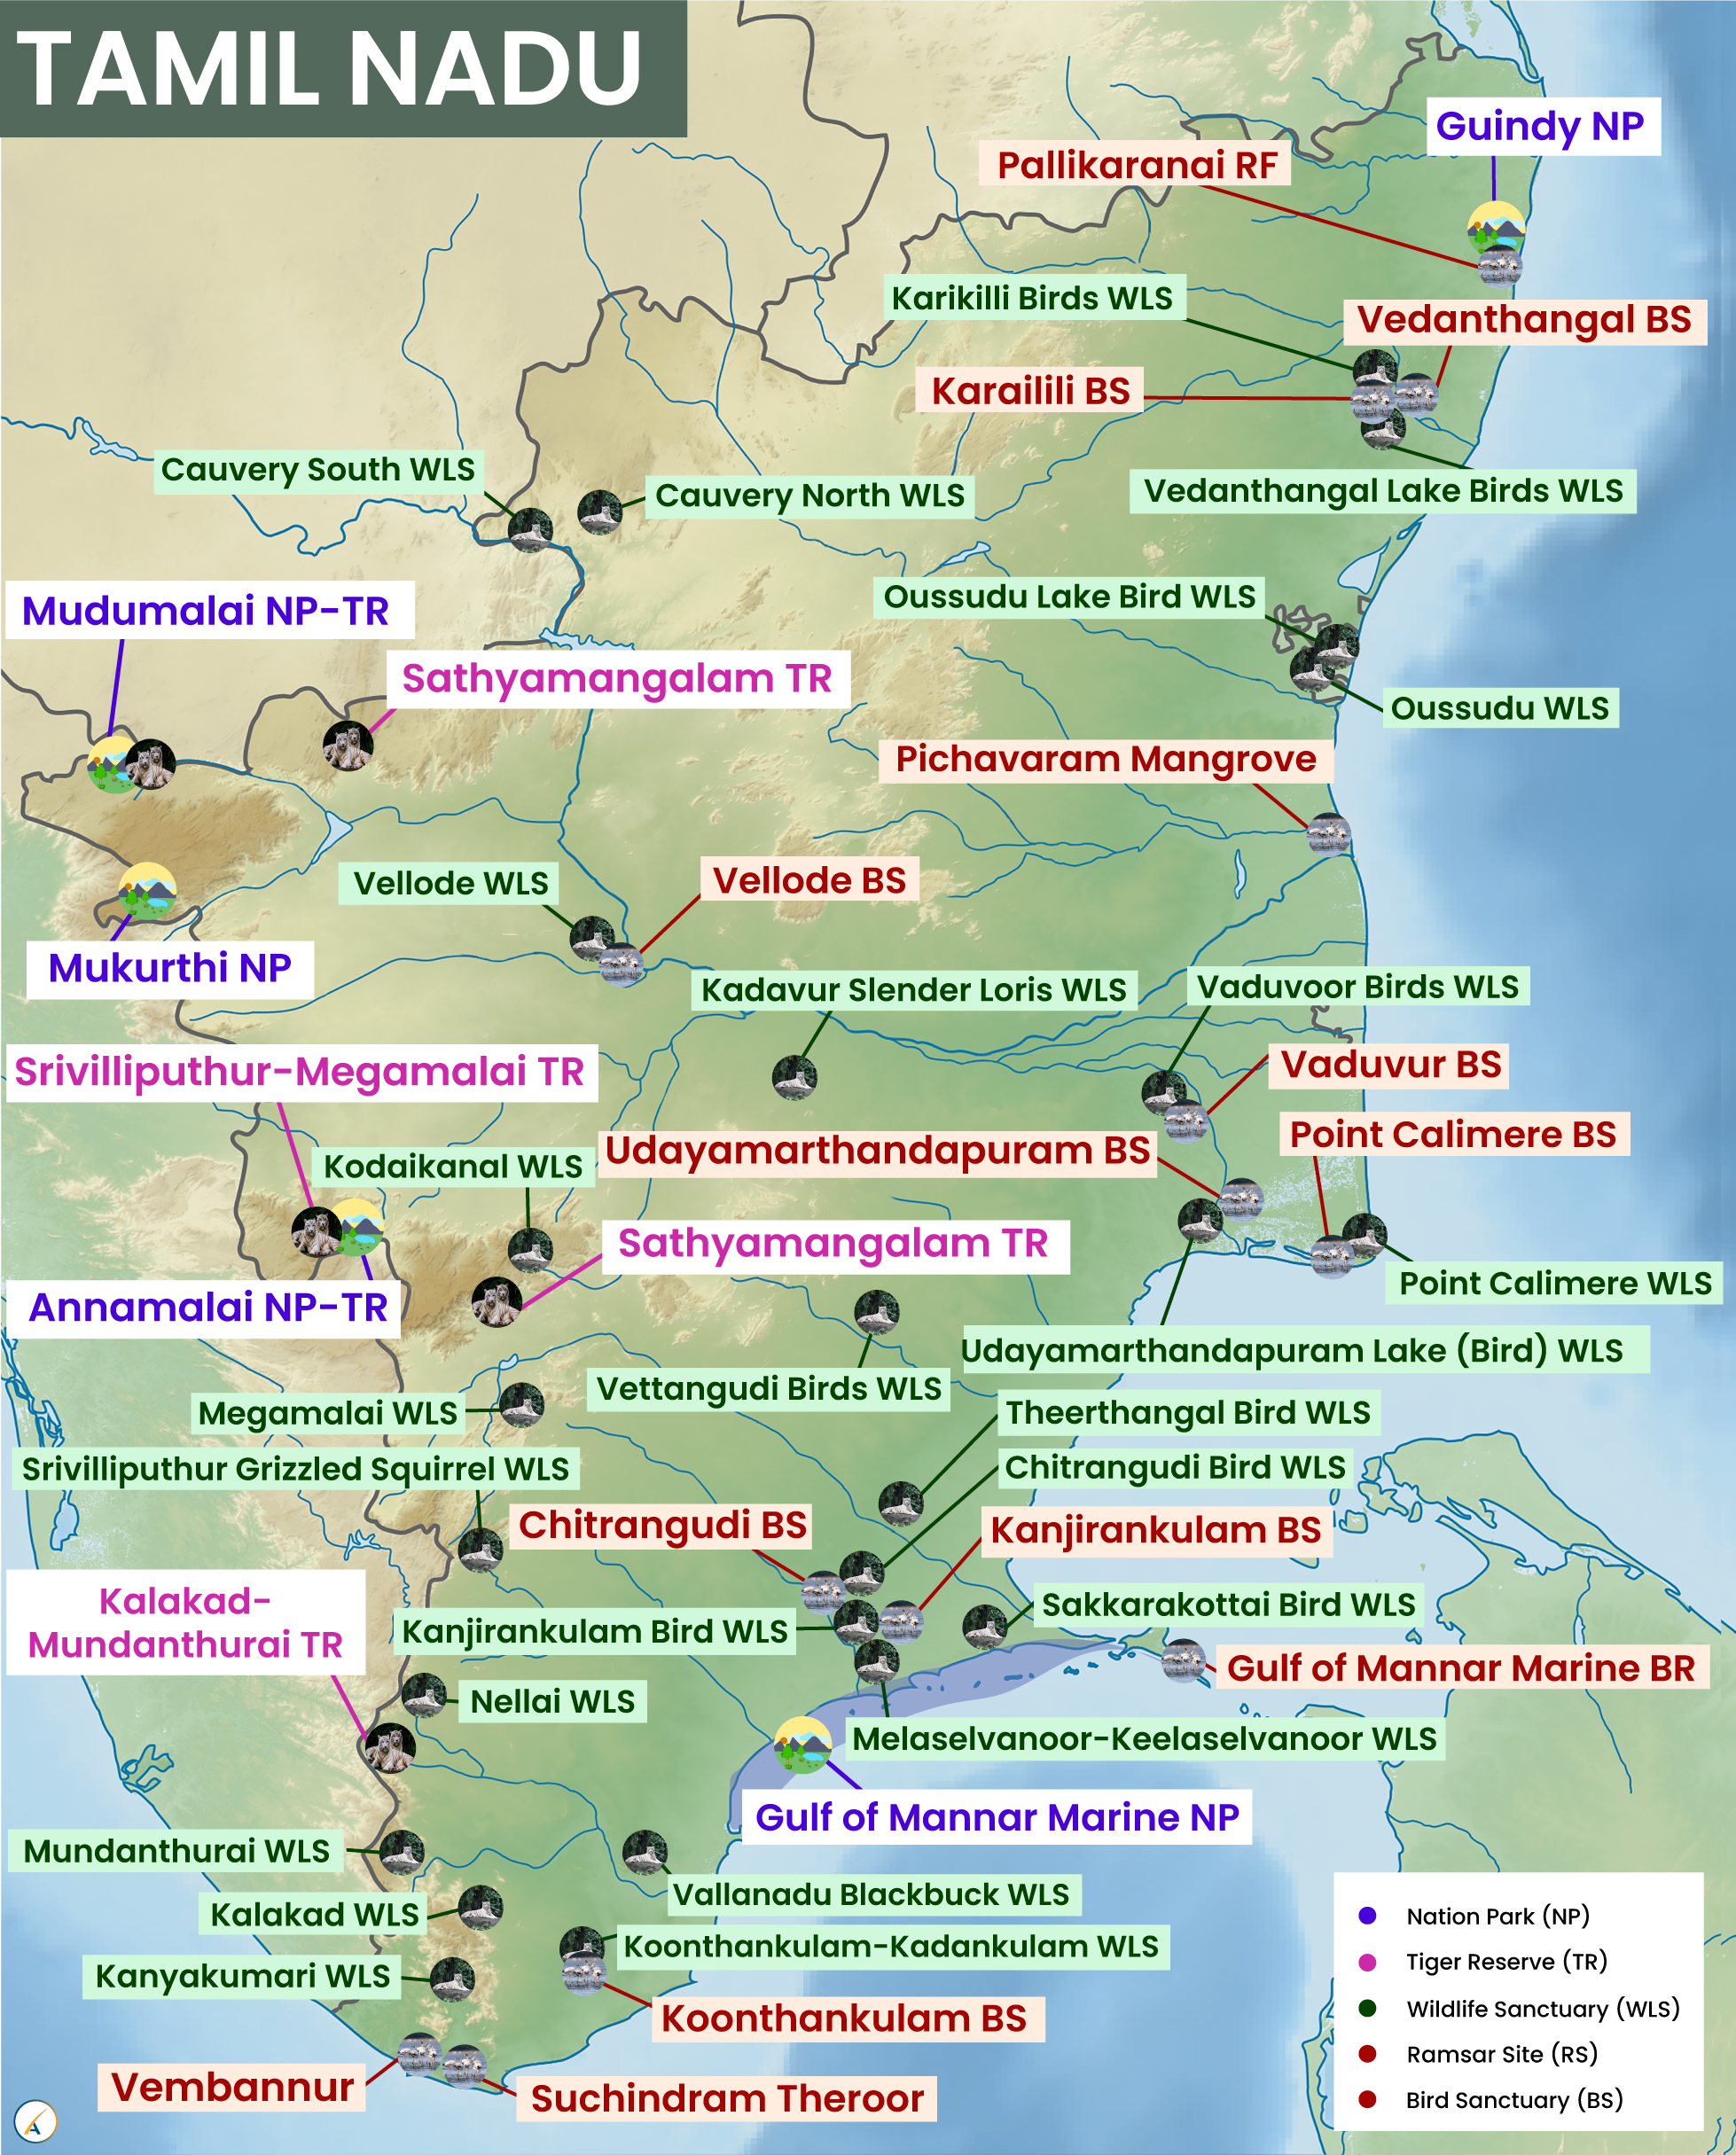 Tamil Nadu National Parks, Tiger Reserves, Wildlife Sanctuaries & Ramsar Sites